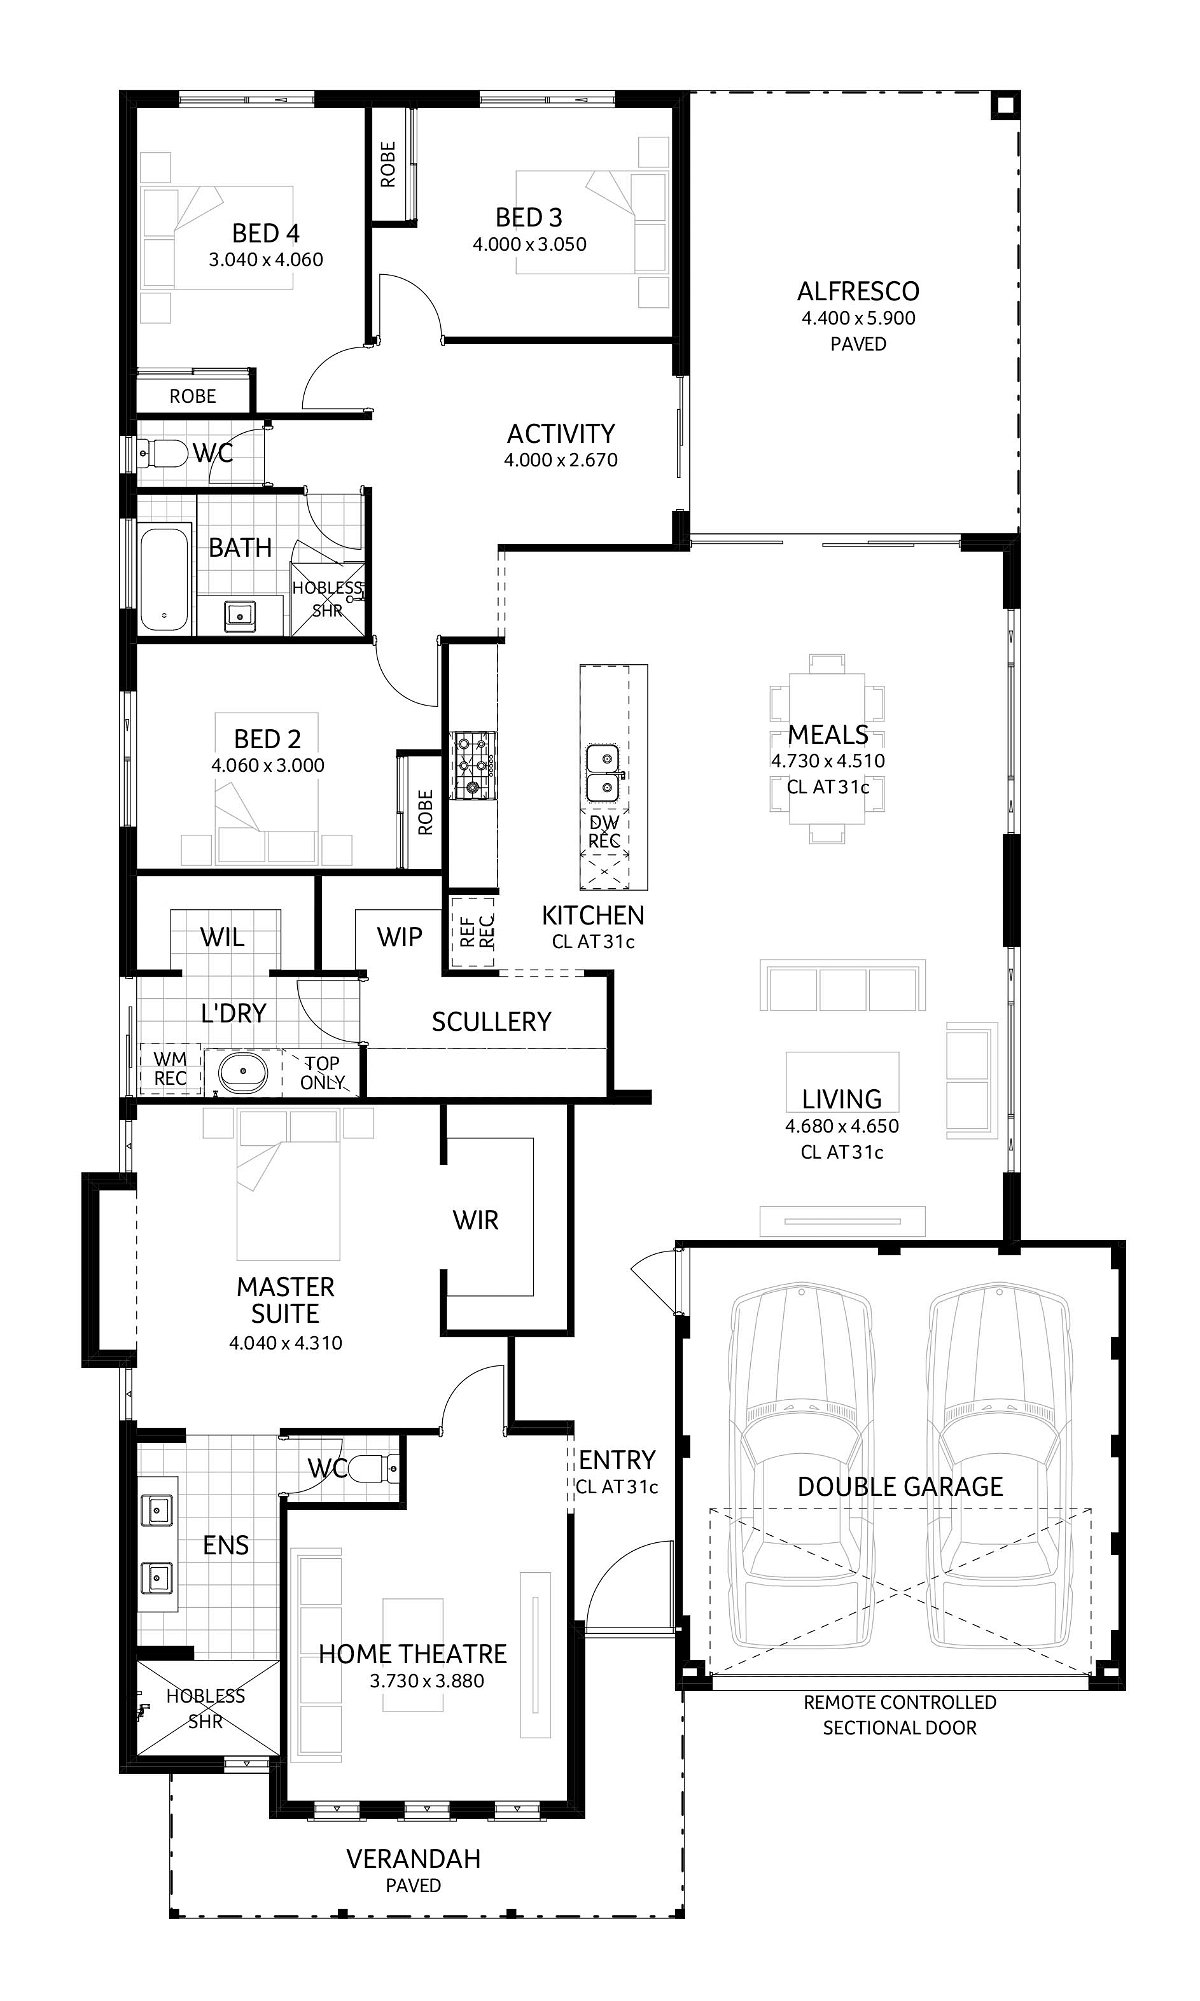 Plunkett Homes - Santana | Federation - Floorplan - Santana Luxe Federation Marketing Plan Croppedjpg